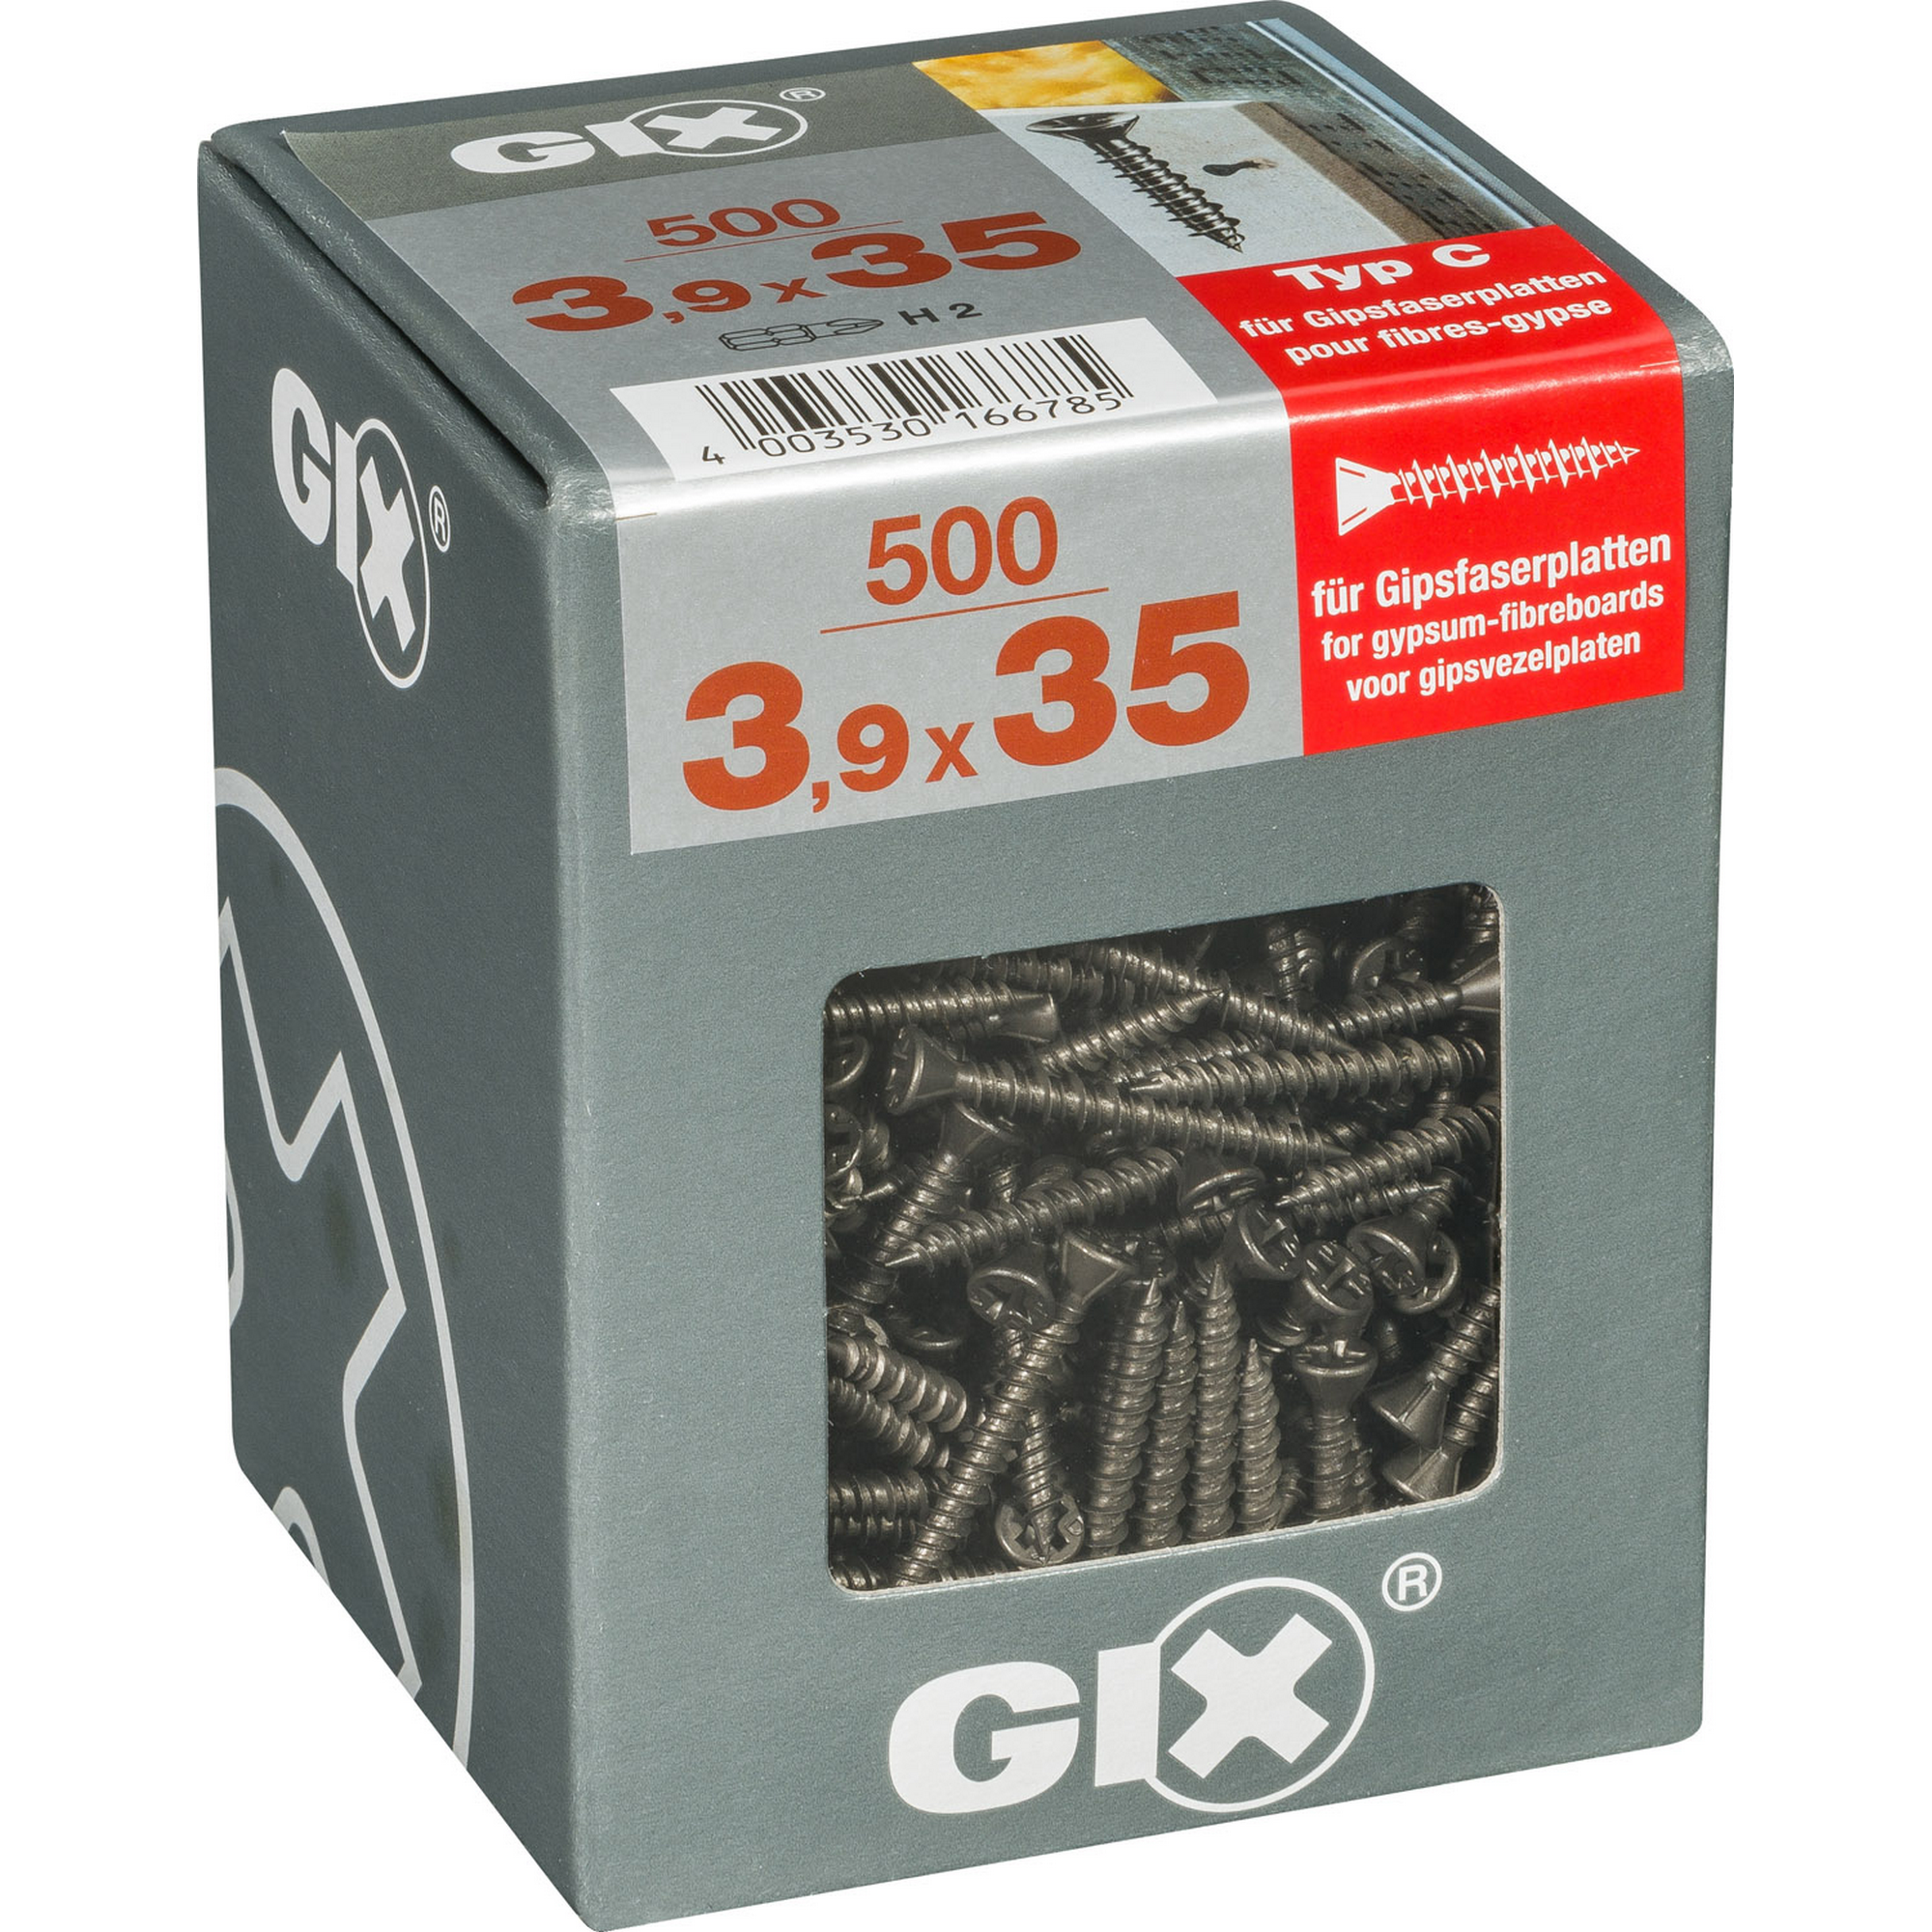 Trockenbauschraube 'Gix-C' PH2 Ø 3,9 x 35 mm 500 Stück + product picture